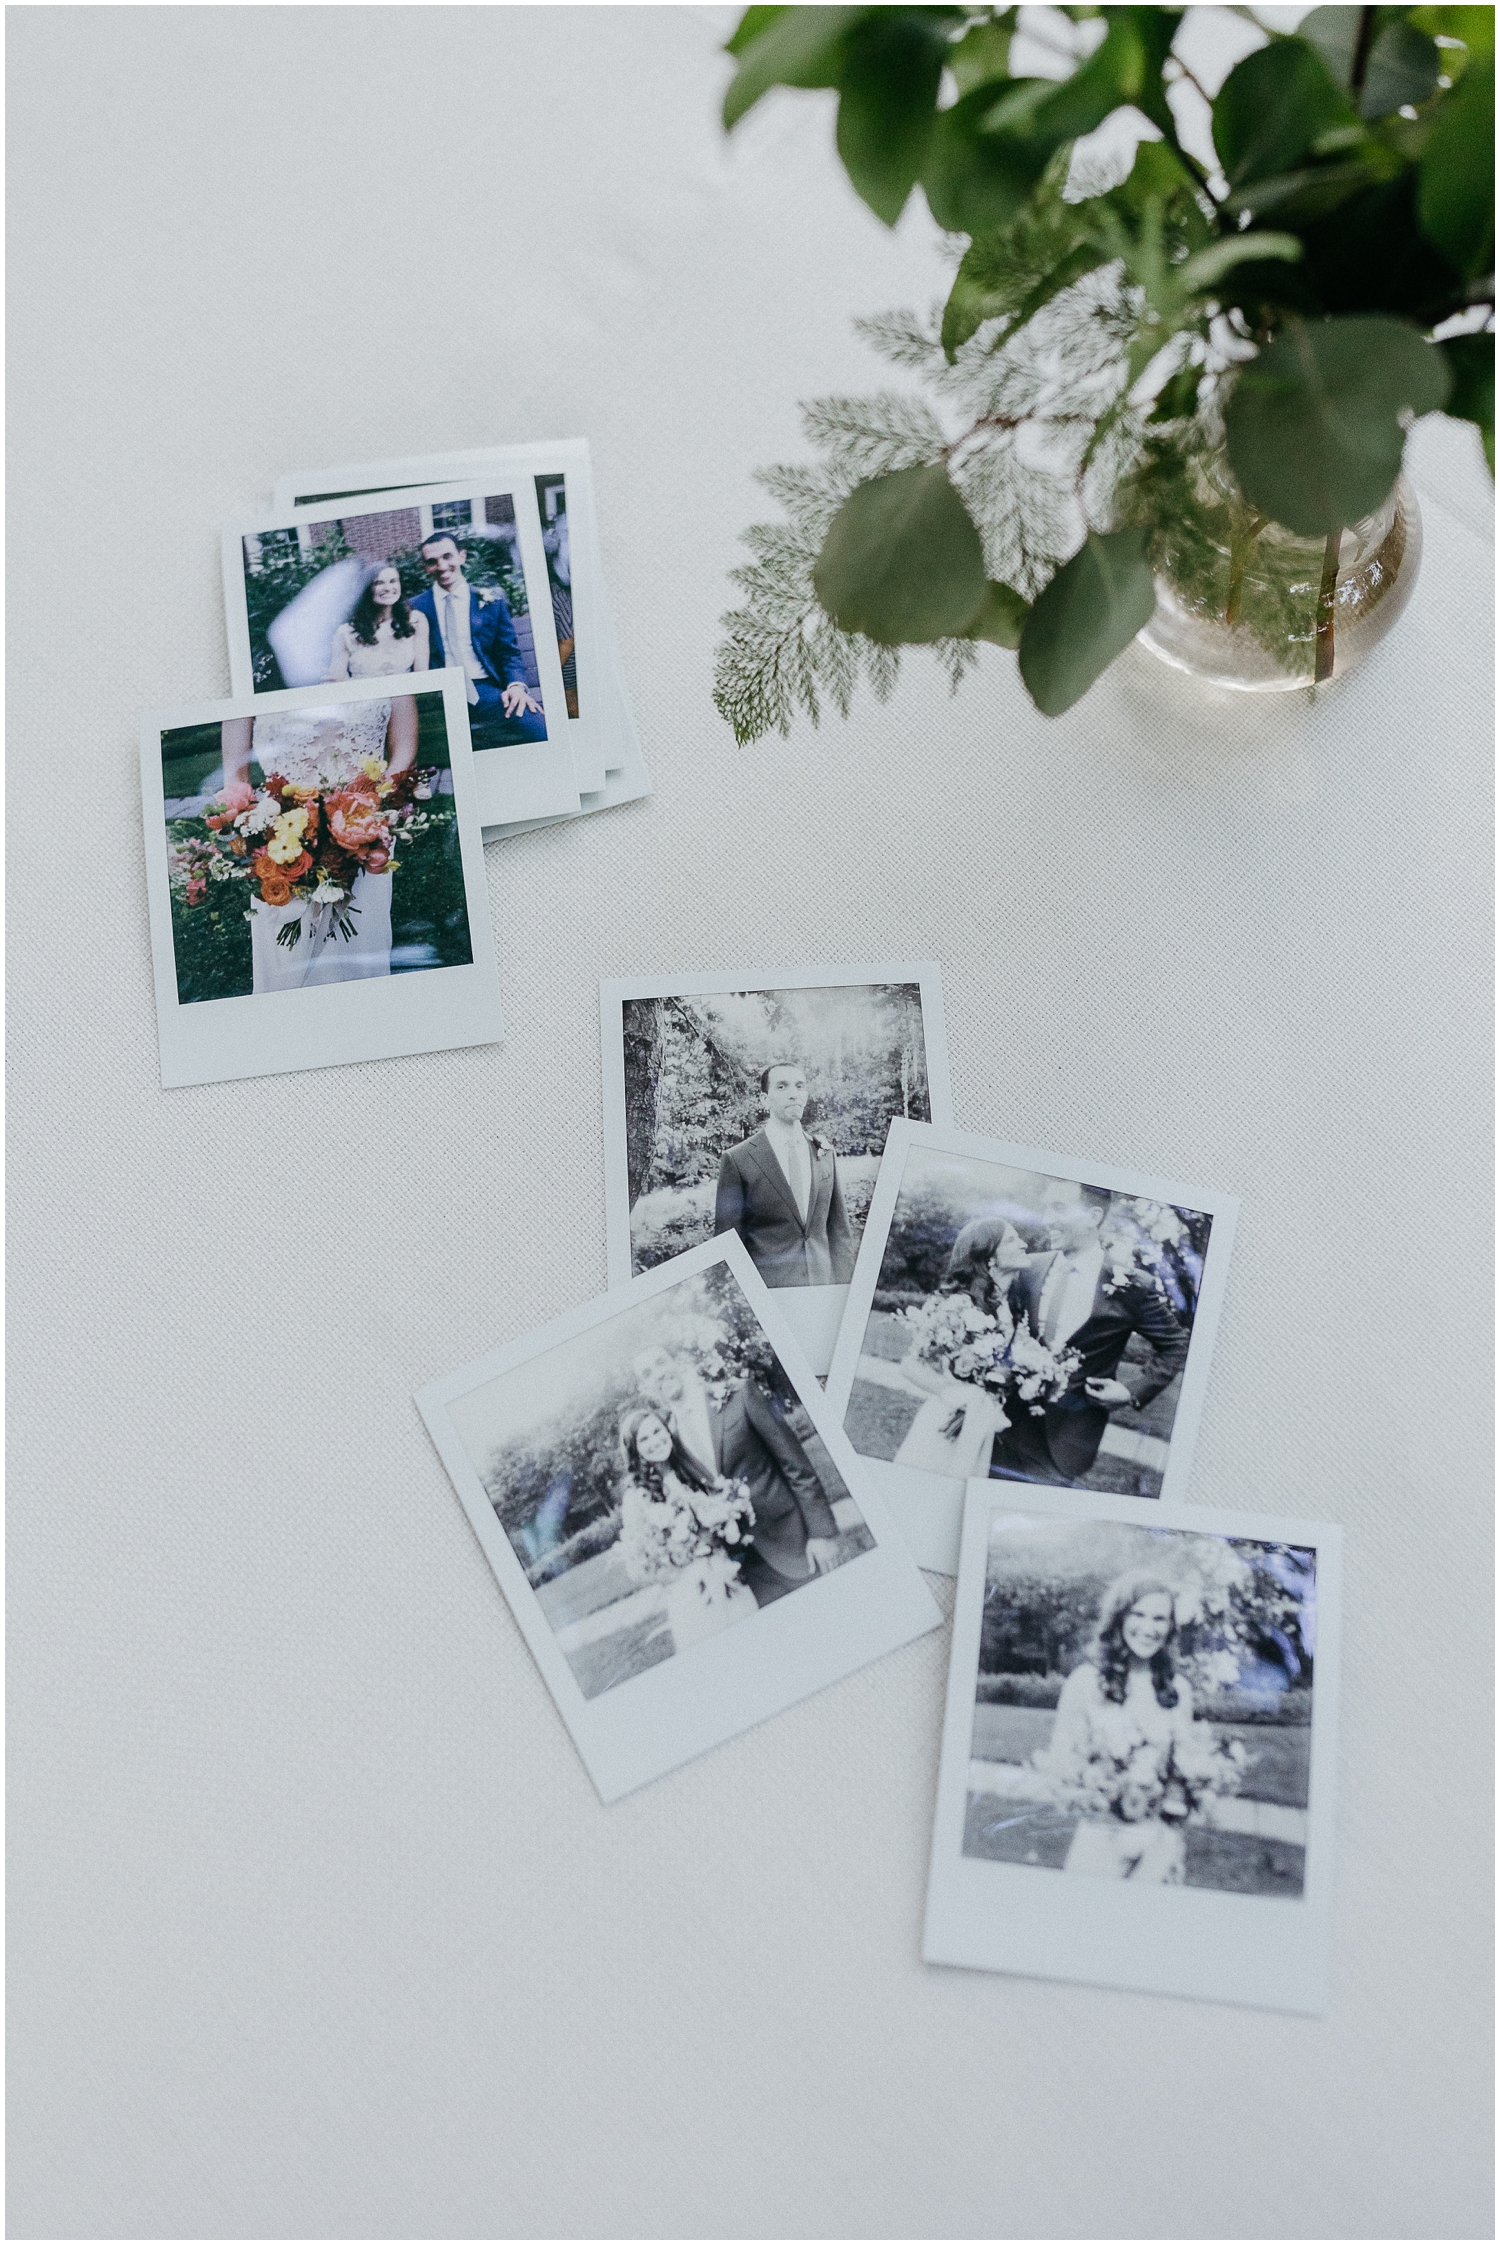 Polaroid wedding photos sit beside a floral arrangement.